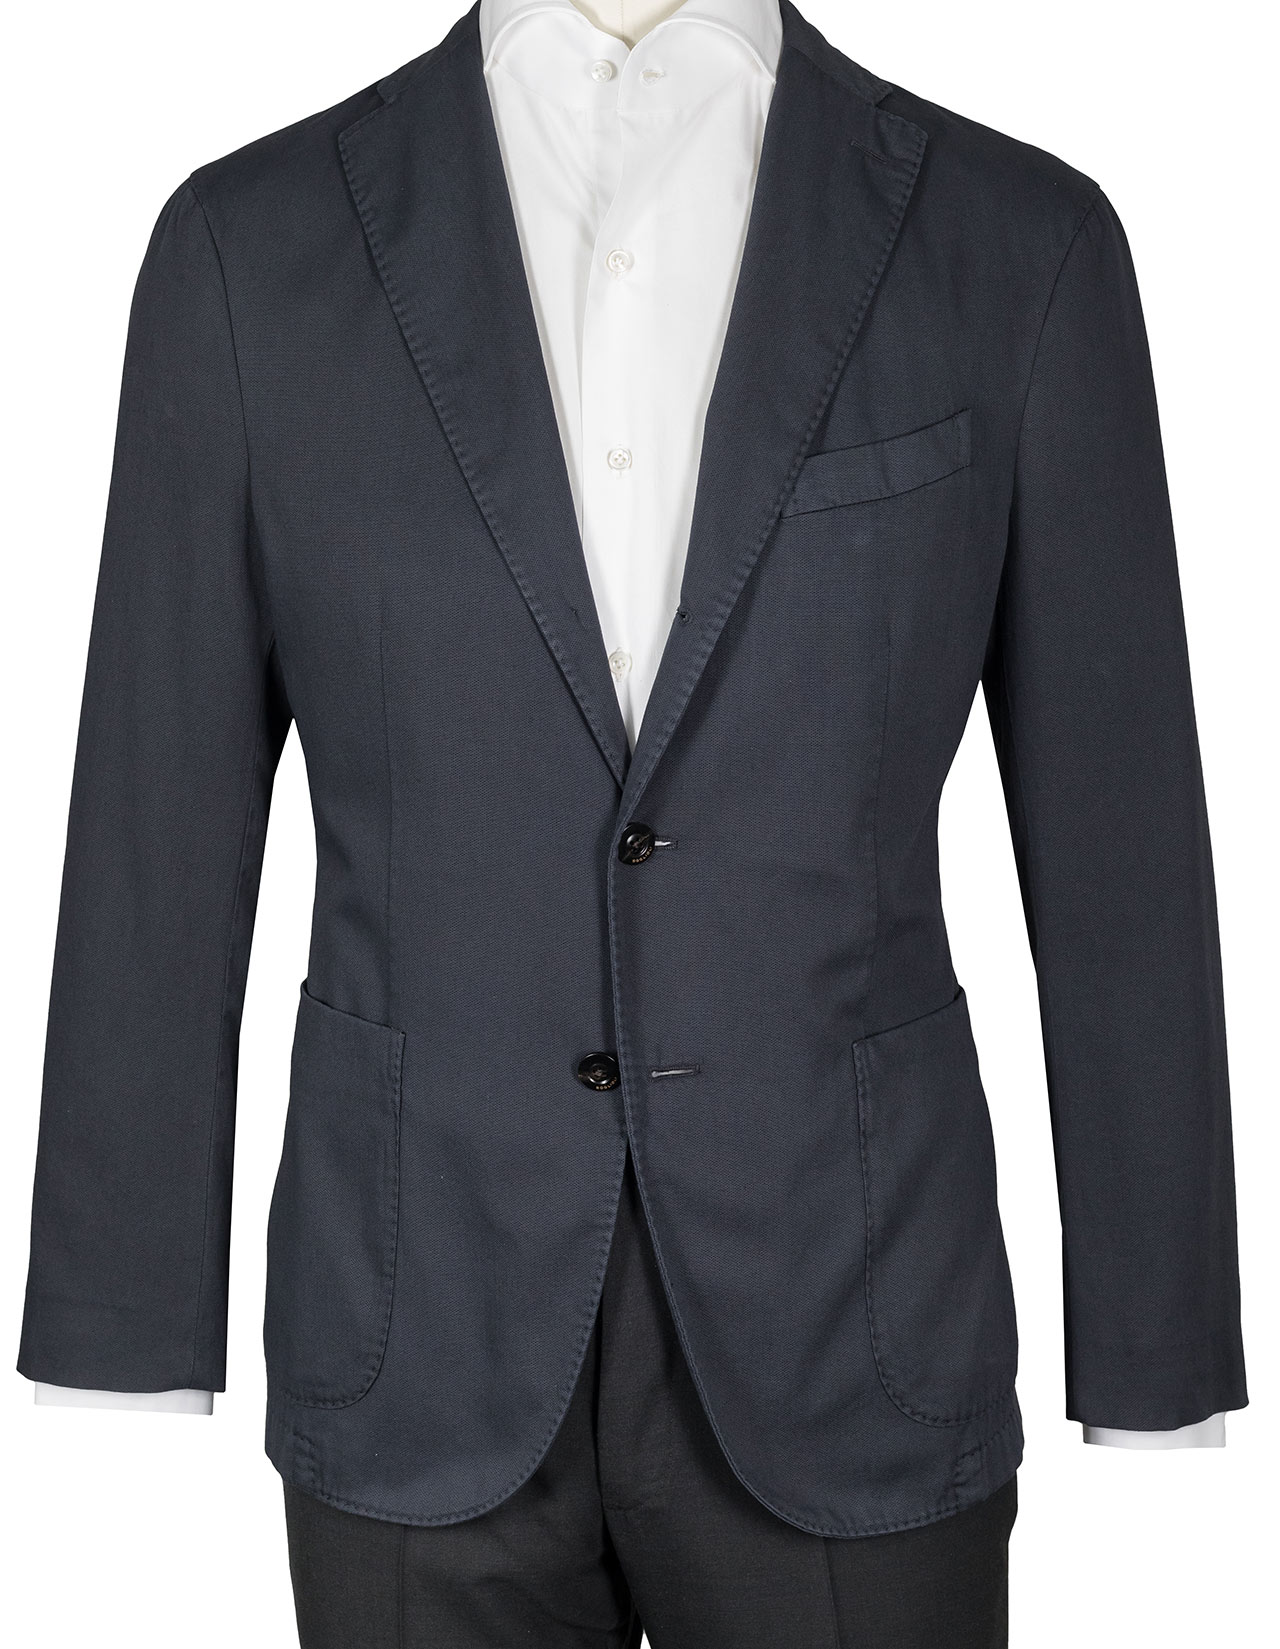 Boglioli Sakko "K-Jacket" in dunkelblau aus Baumwolle 